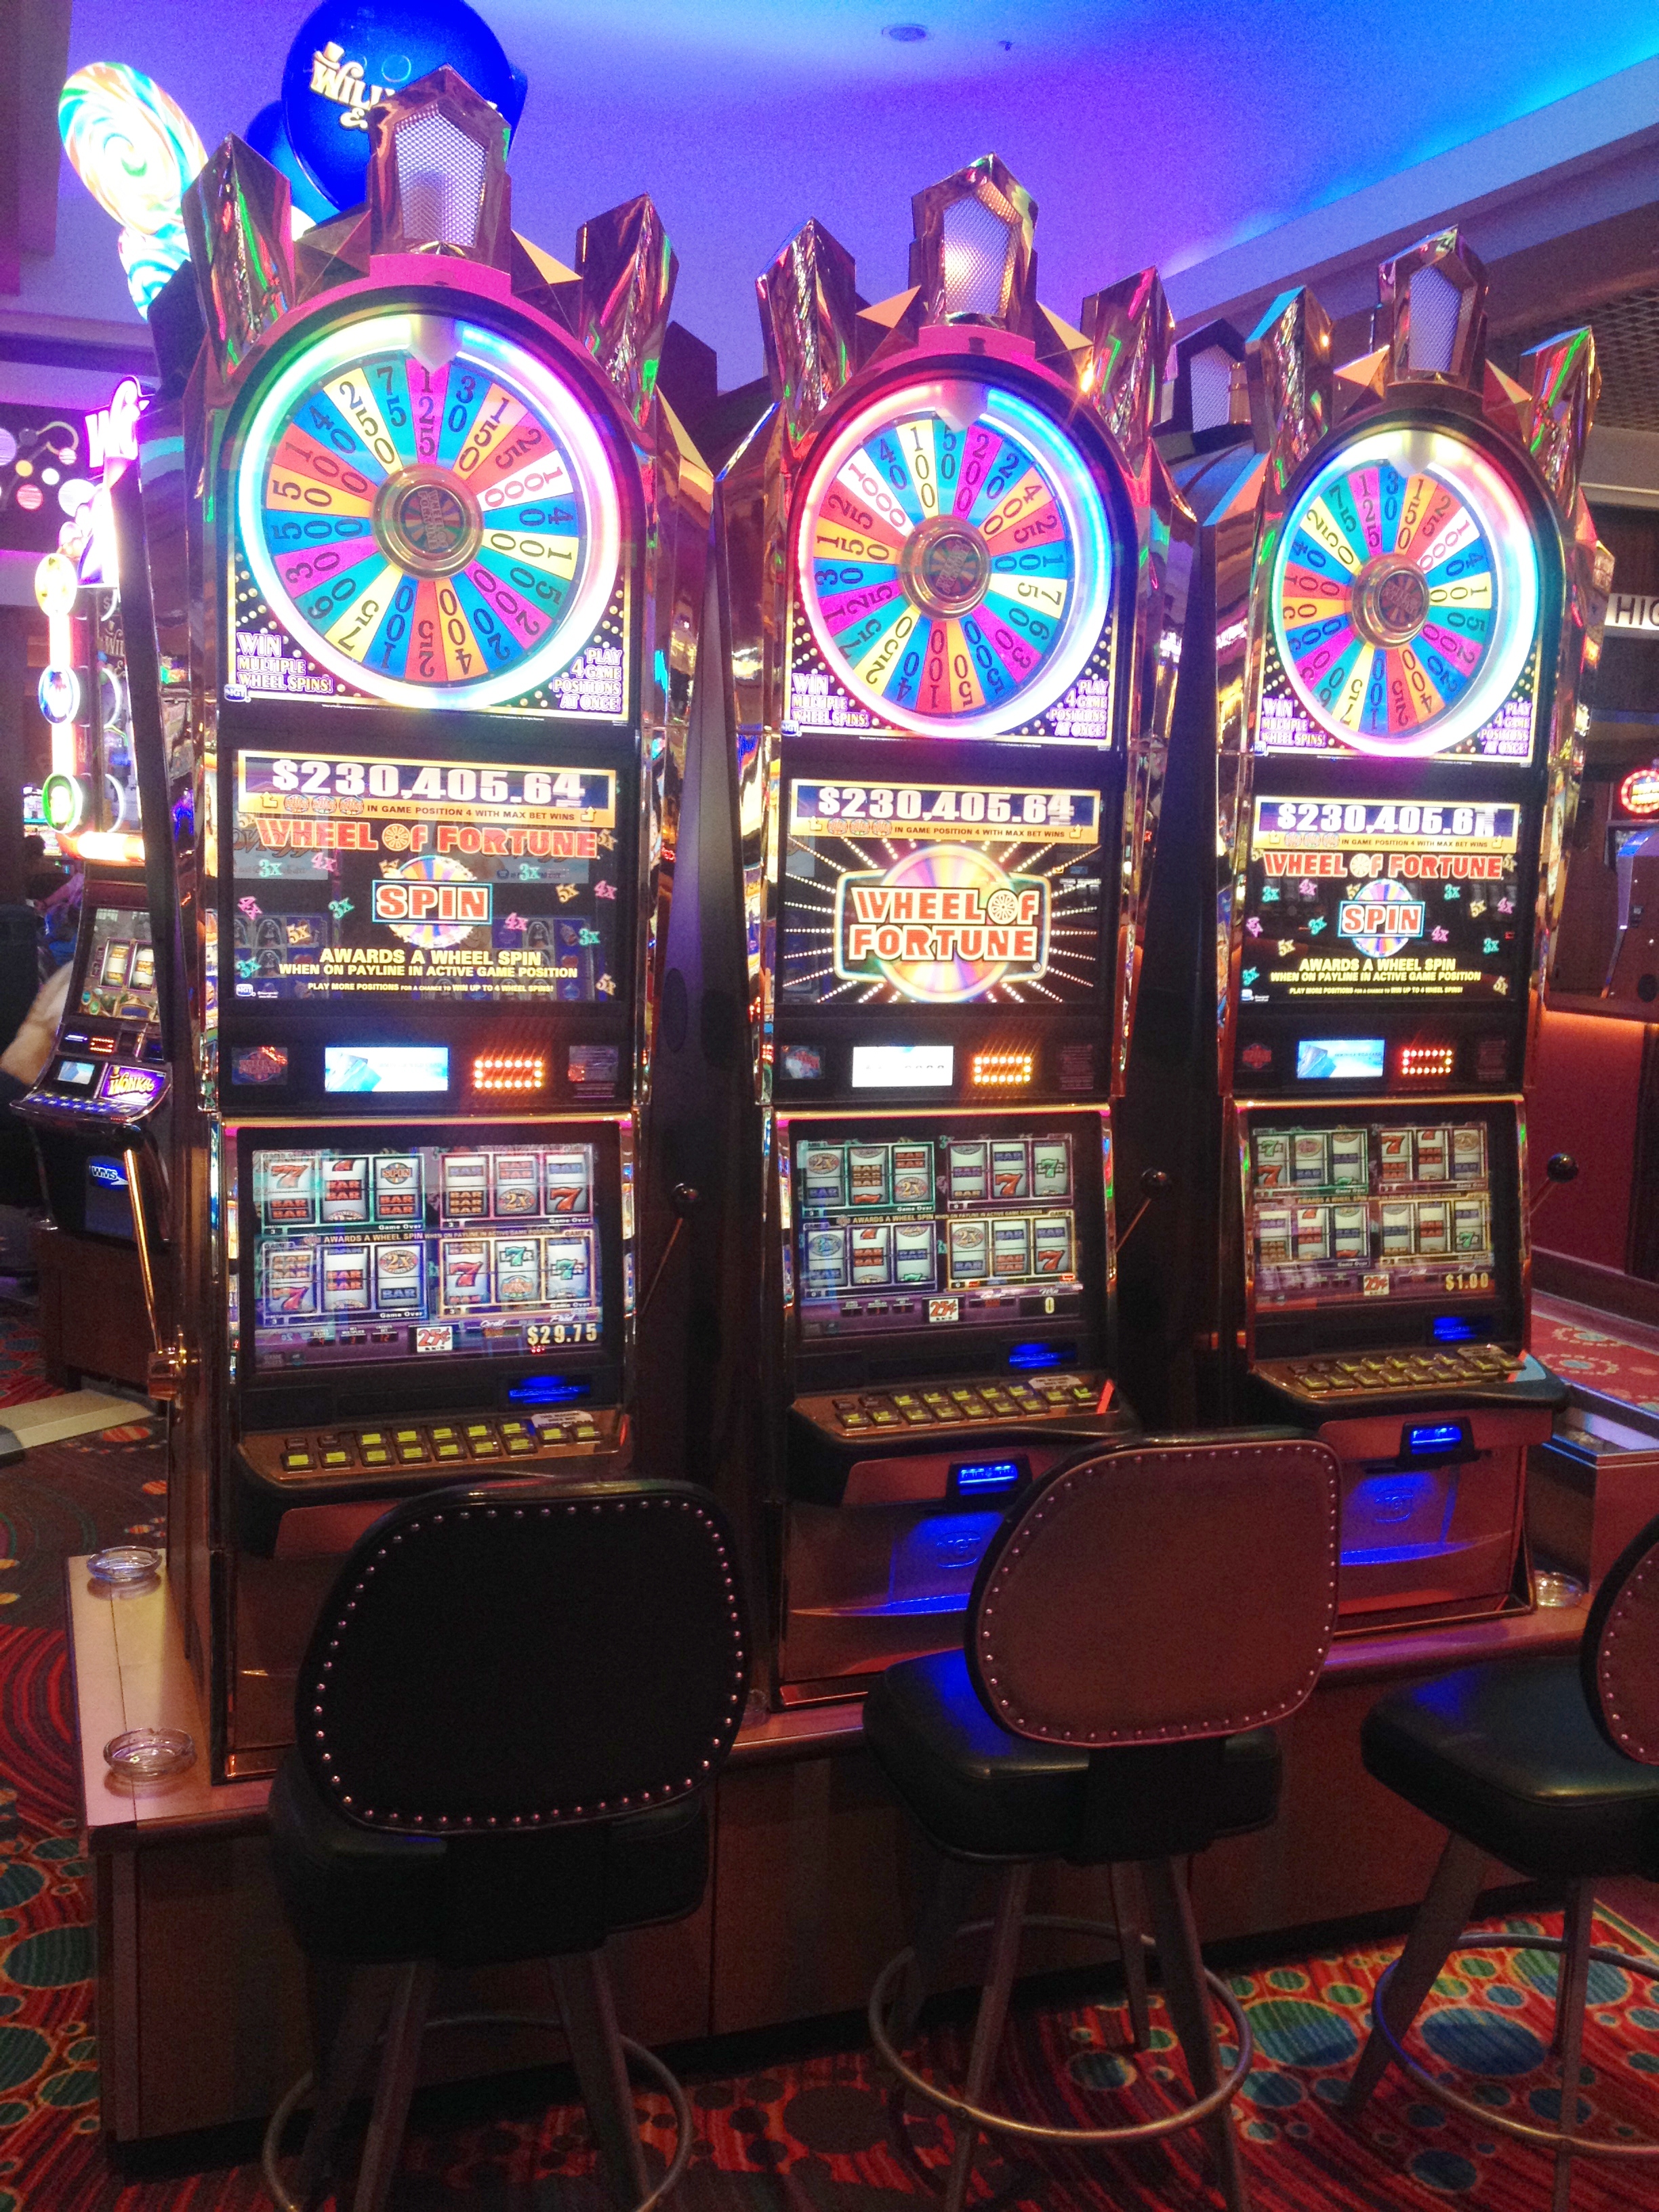 Play Free Wheel Of Fortune Slot Machine